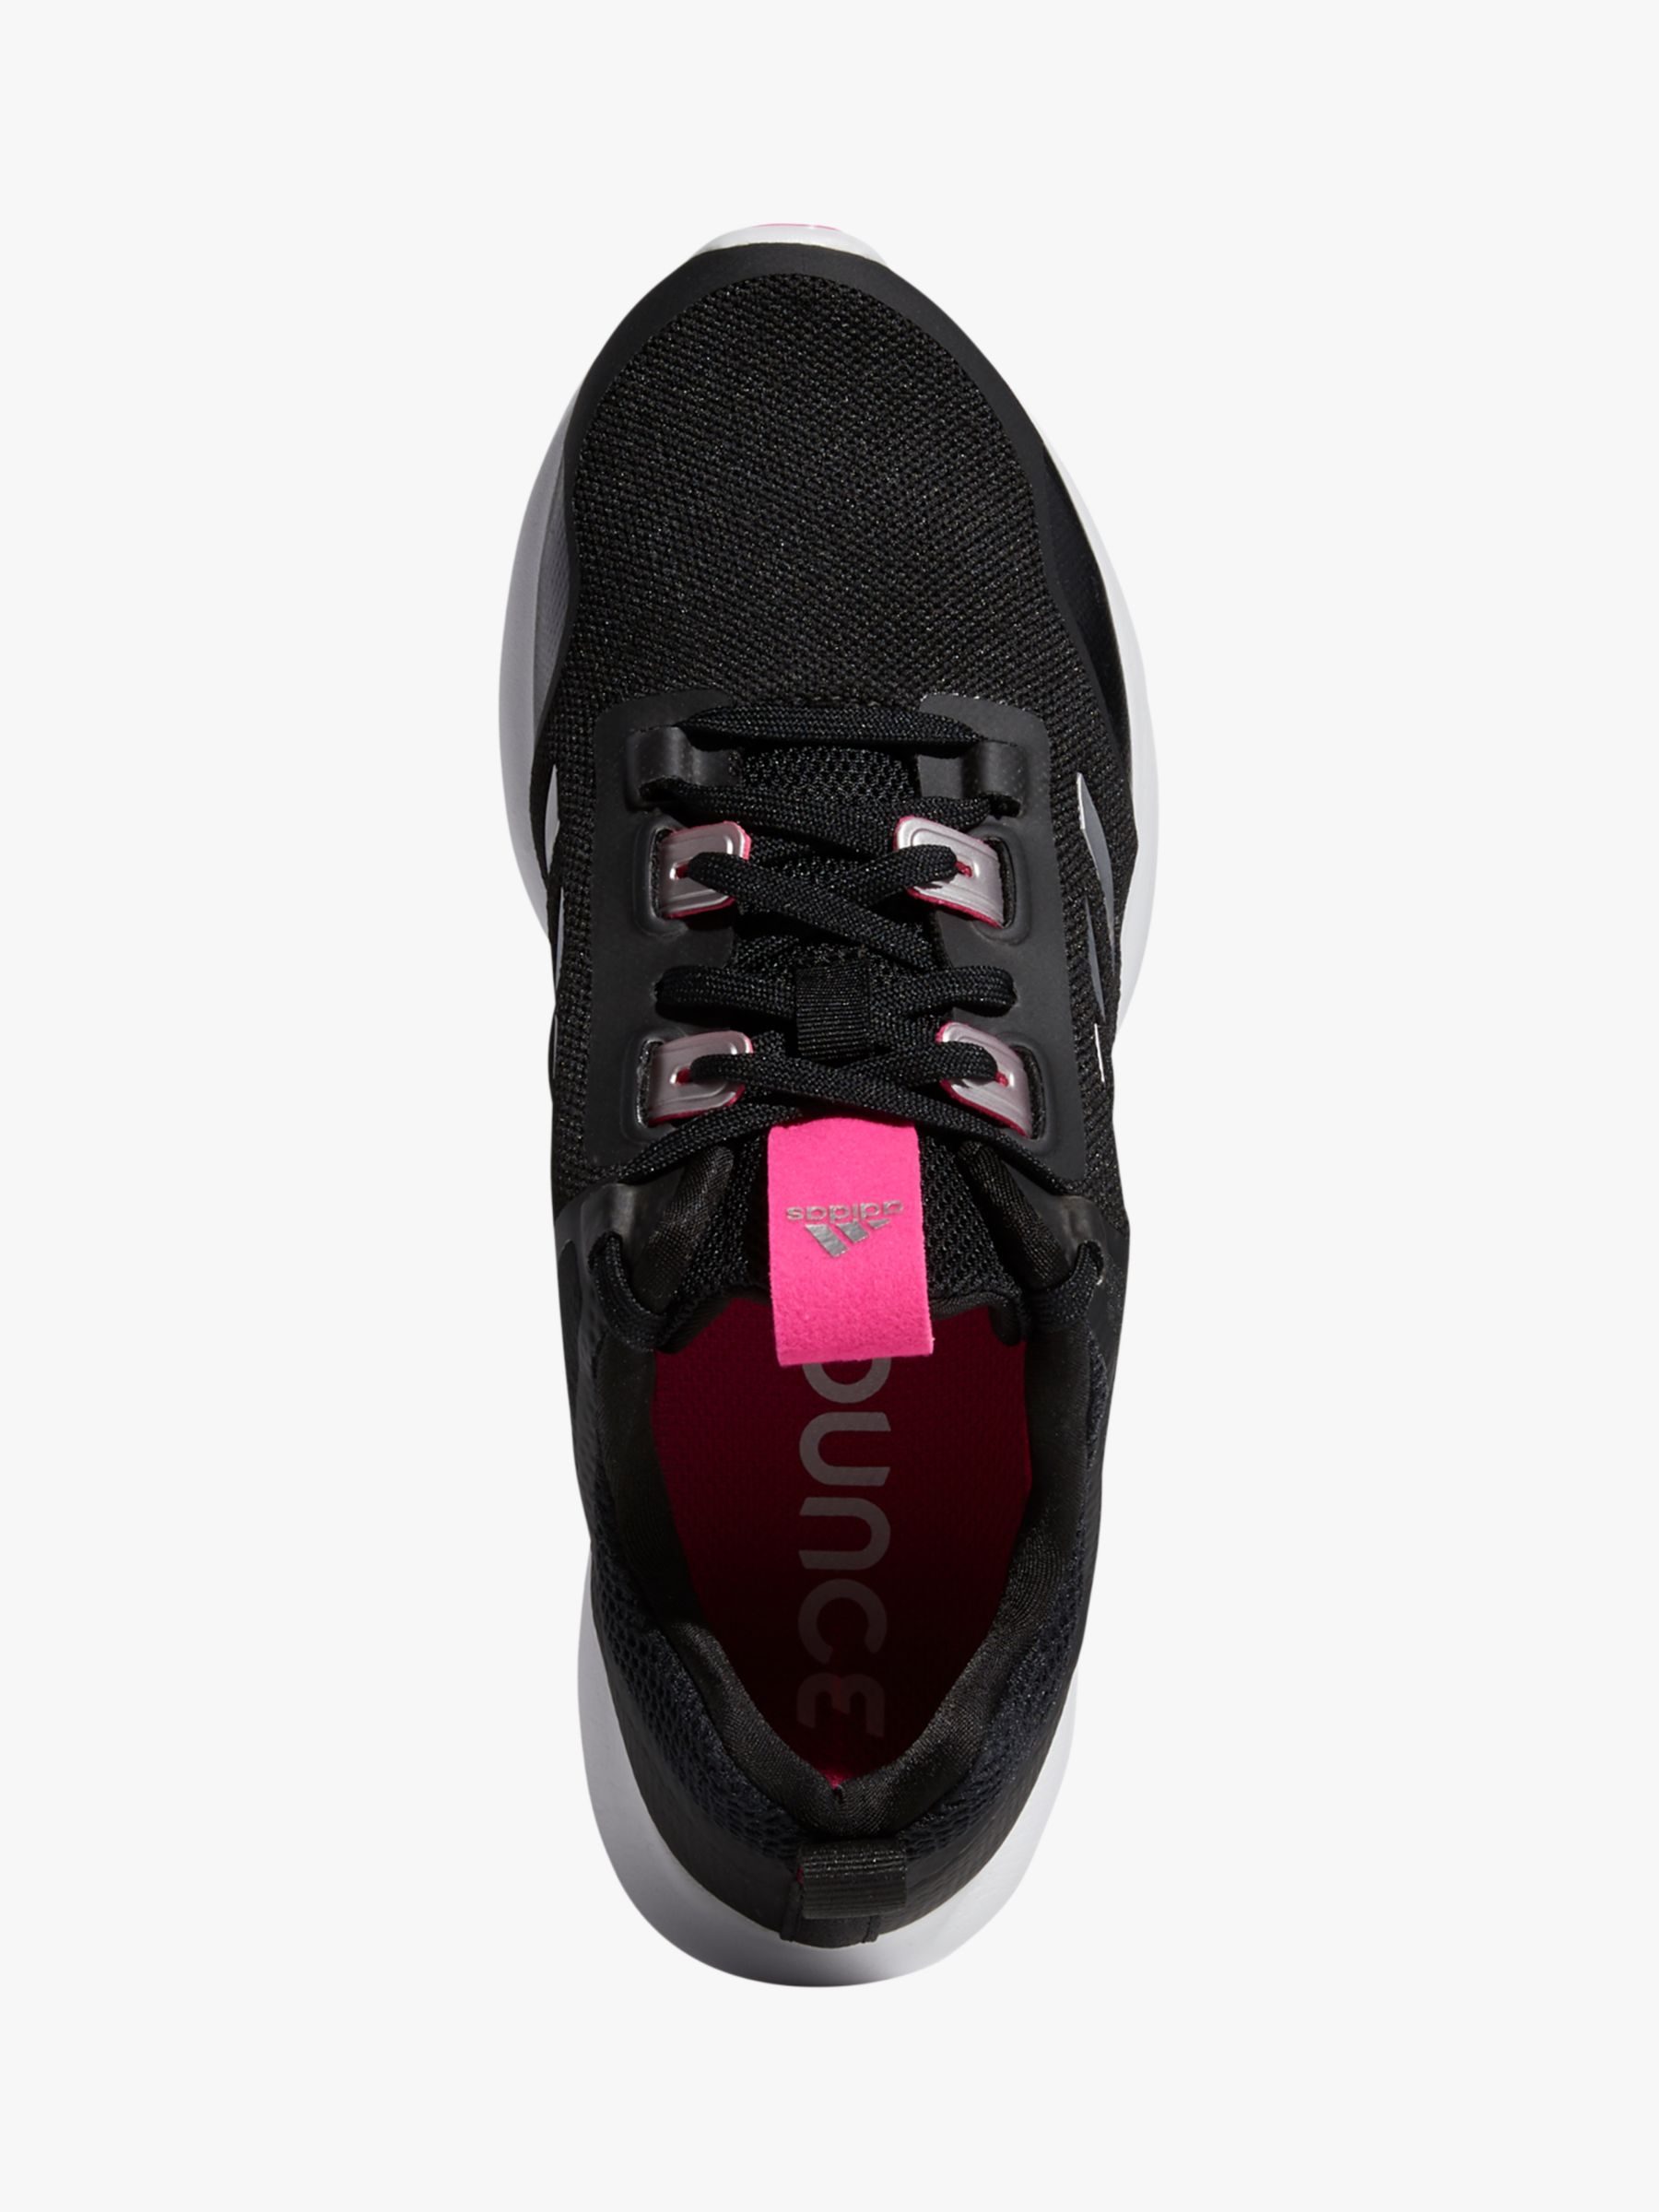 adidas edgebounce pink